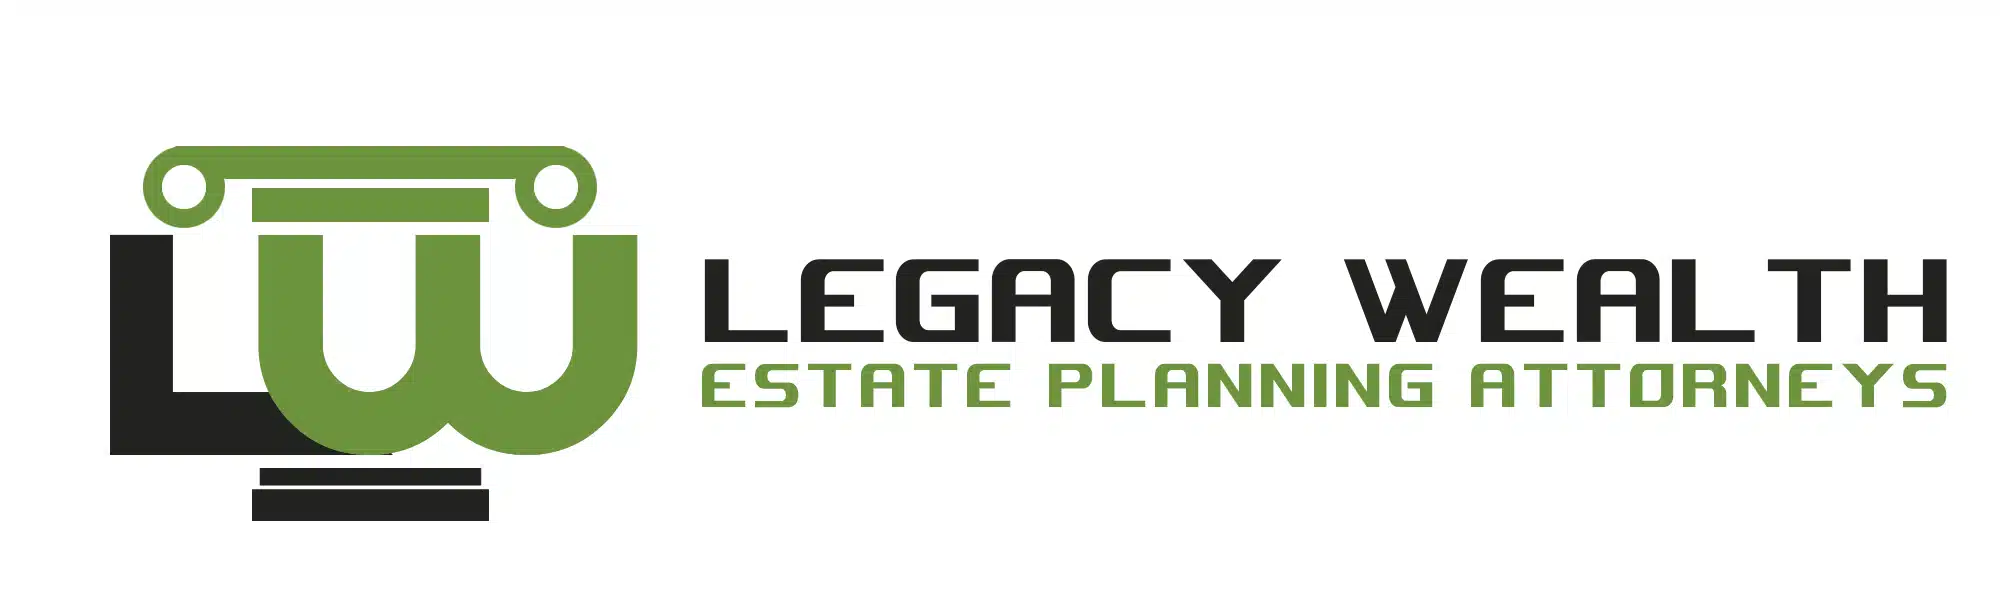 Legacy-Wealth-Estate-Planning-Attorneys-4.jpg.webp